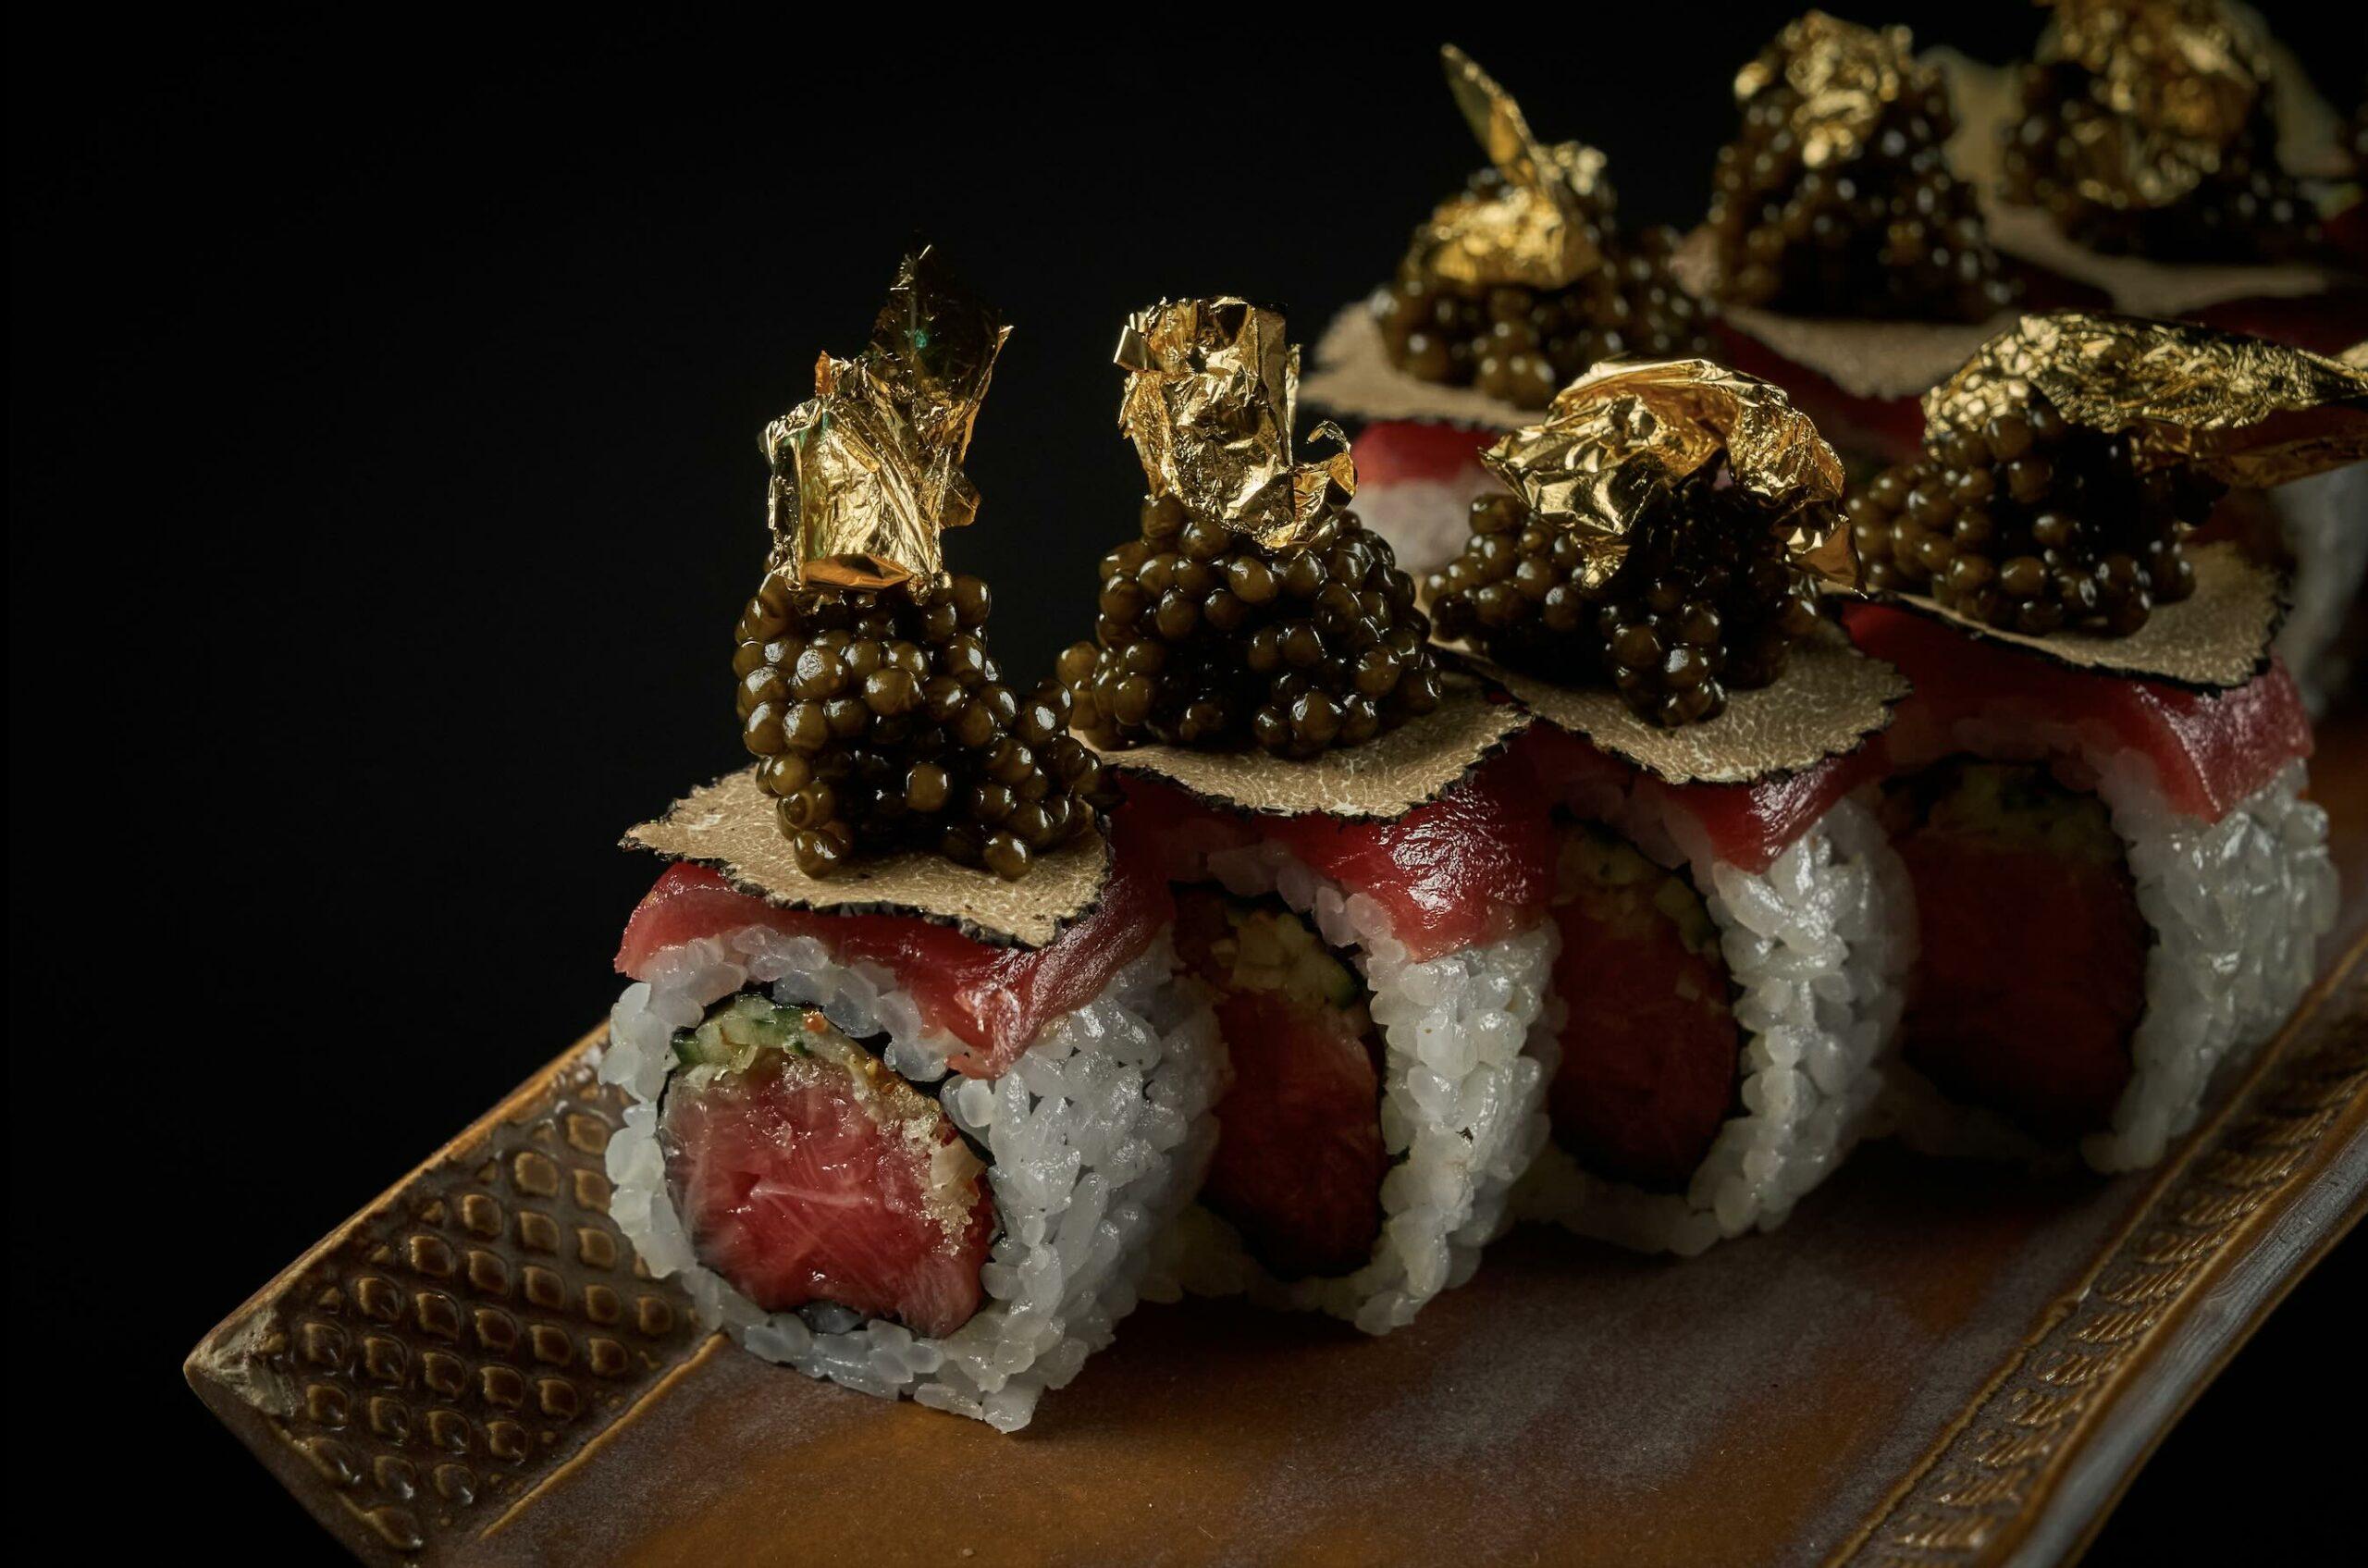 99 Sushi Bar & Restaurant to open Kō in Abu Dhabi and Dubai